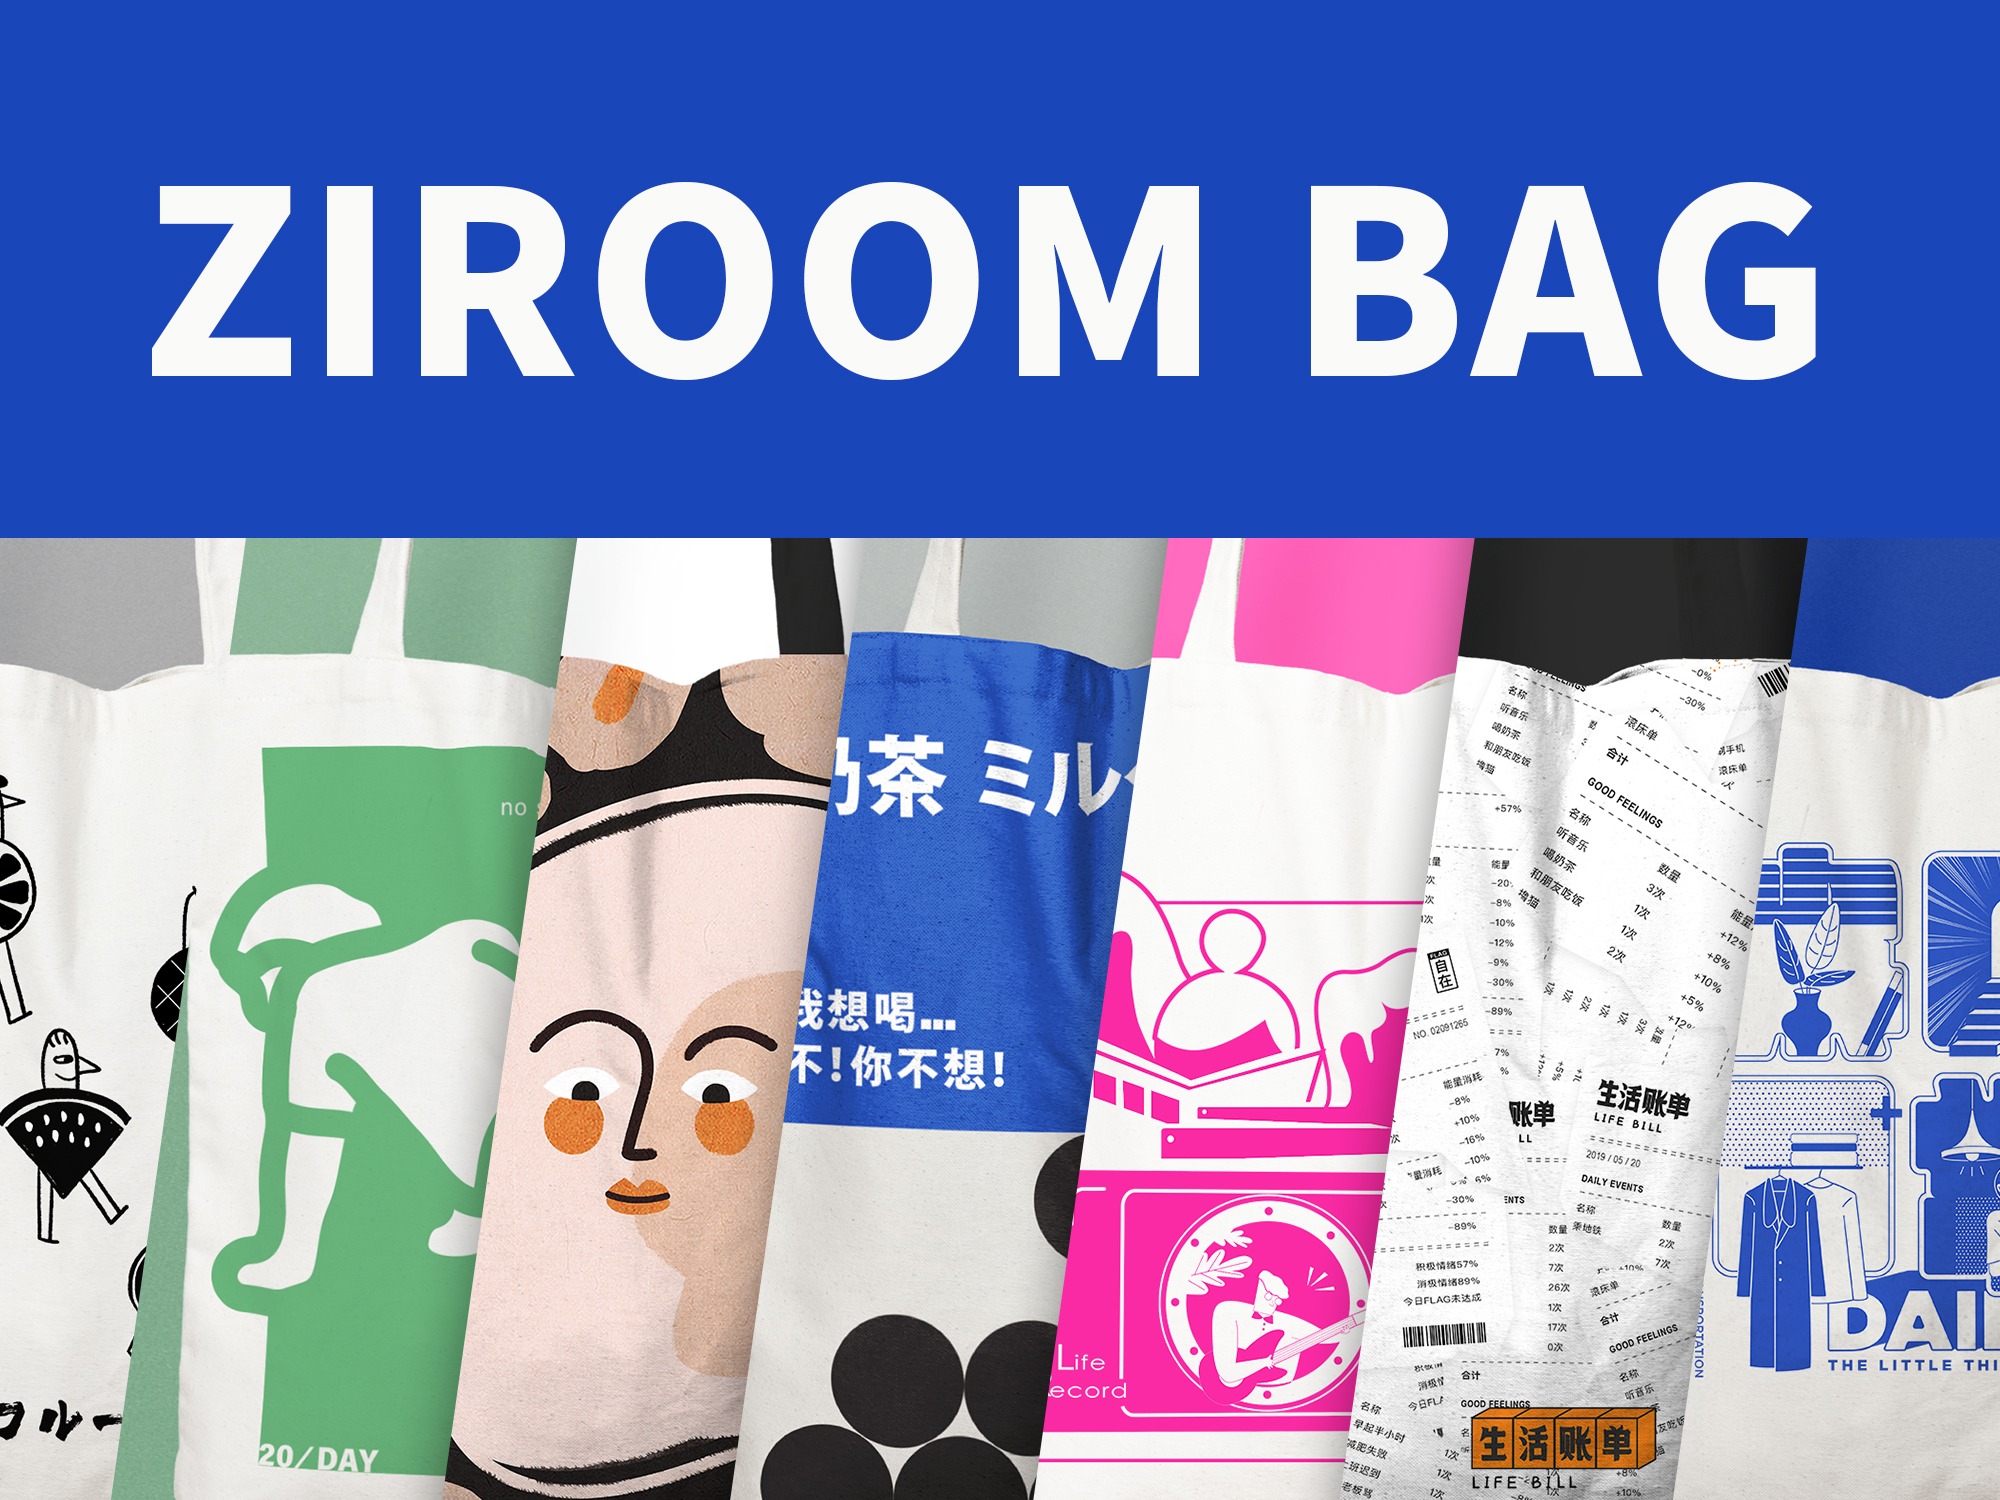 自如生活帆布包设计 ziroom design center bag